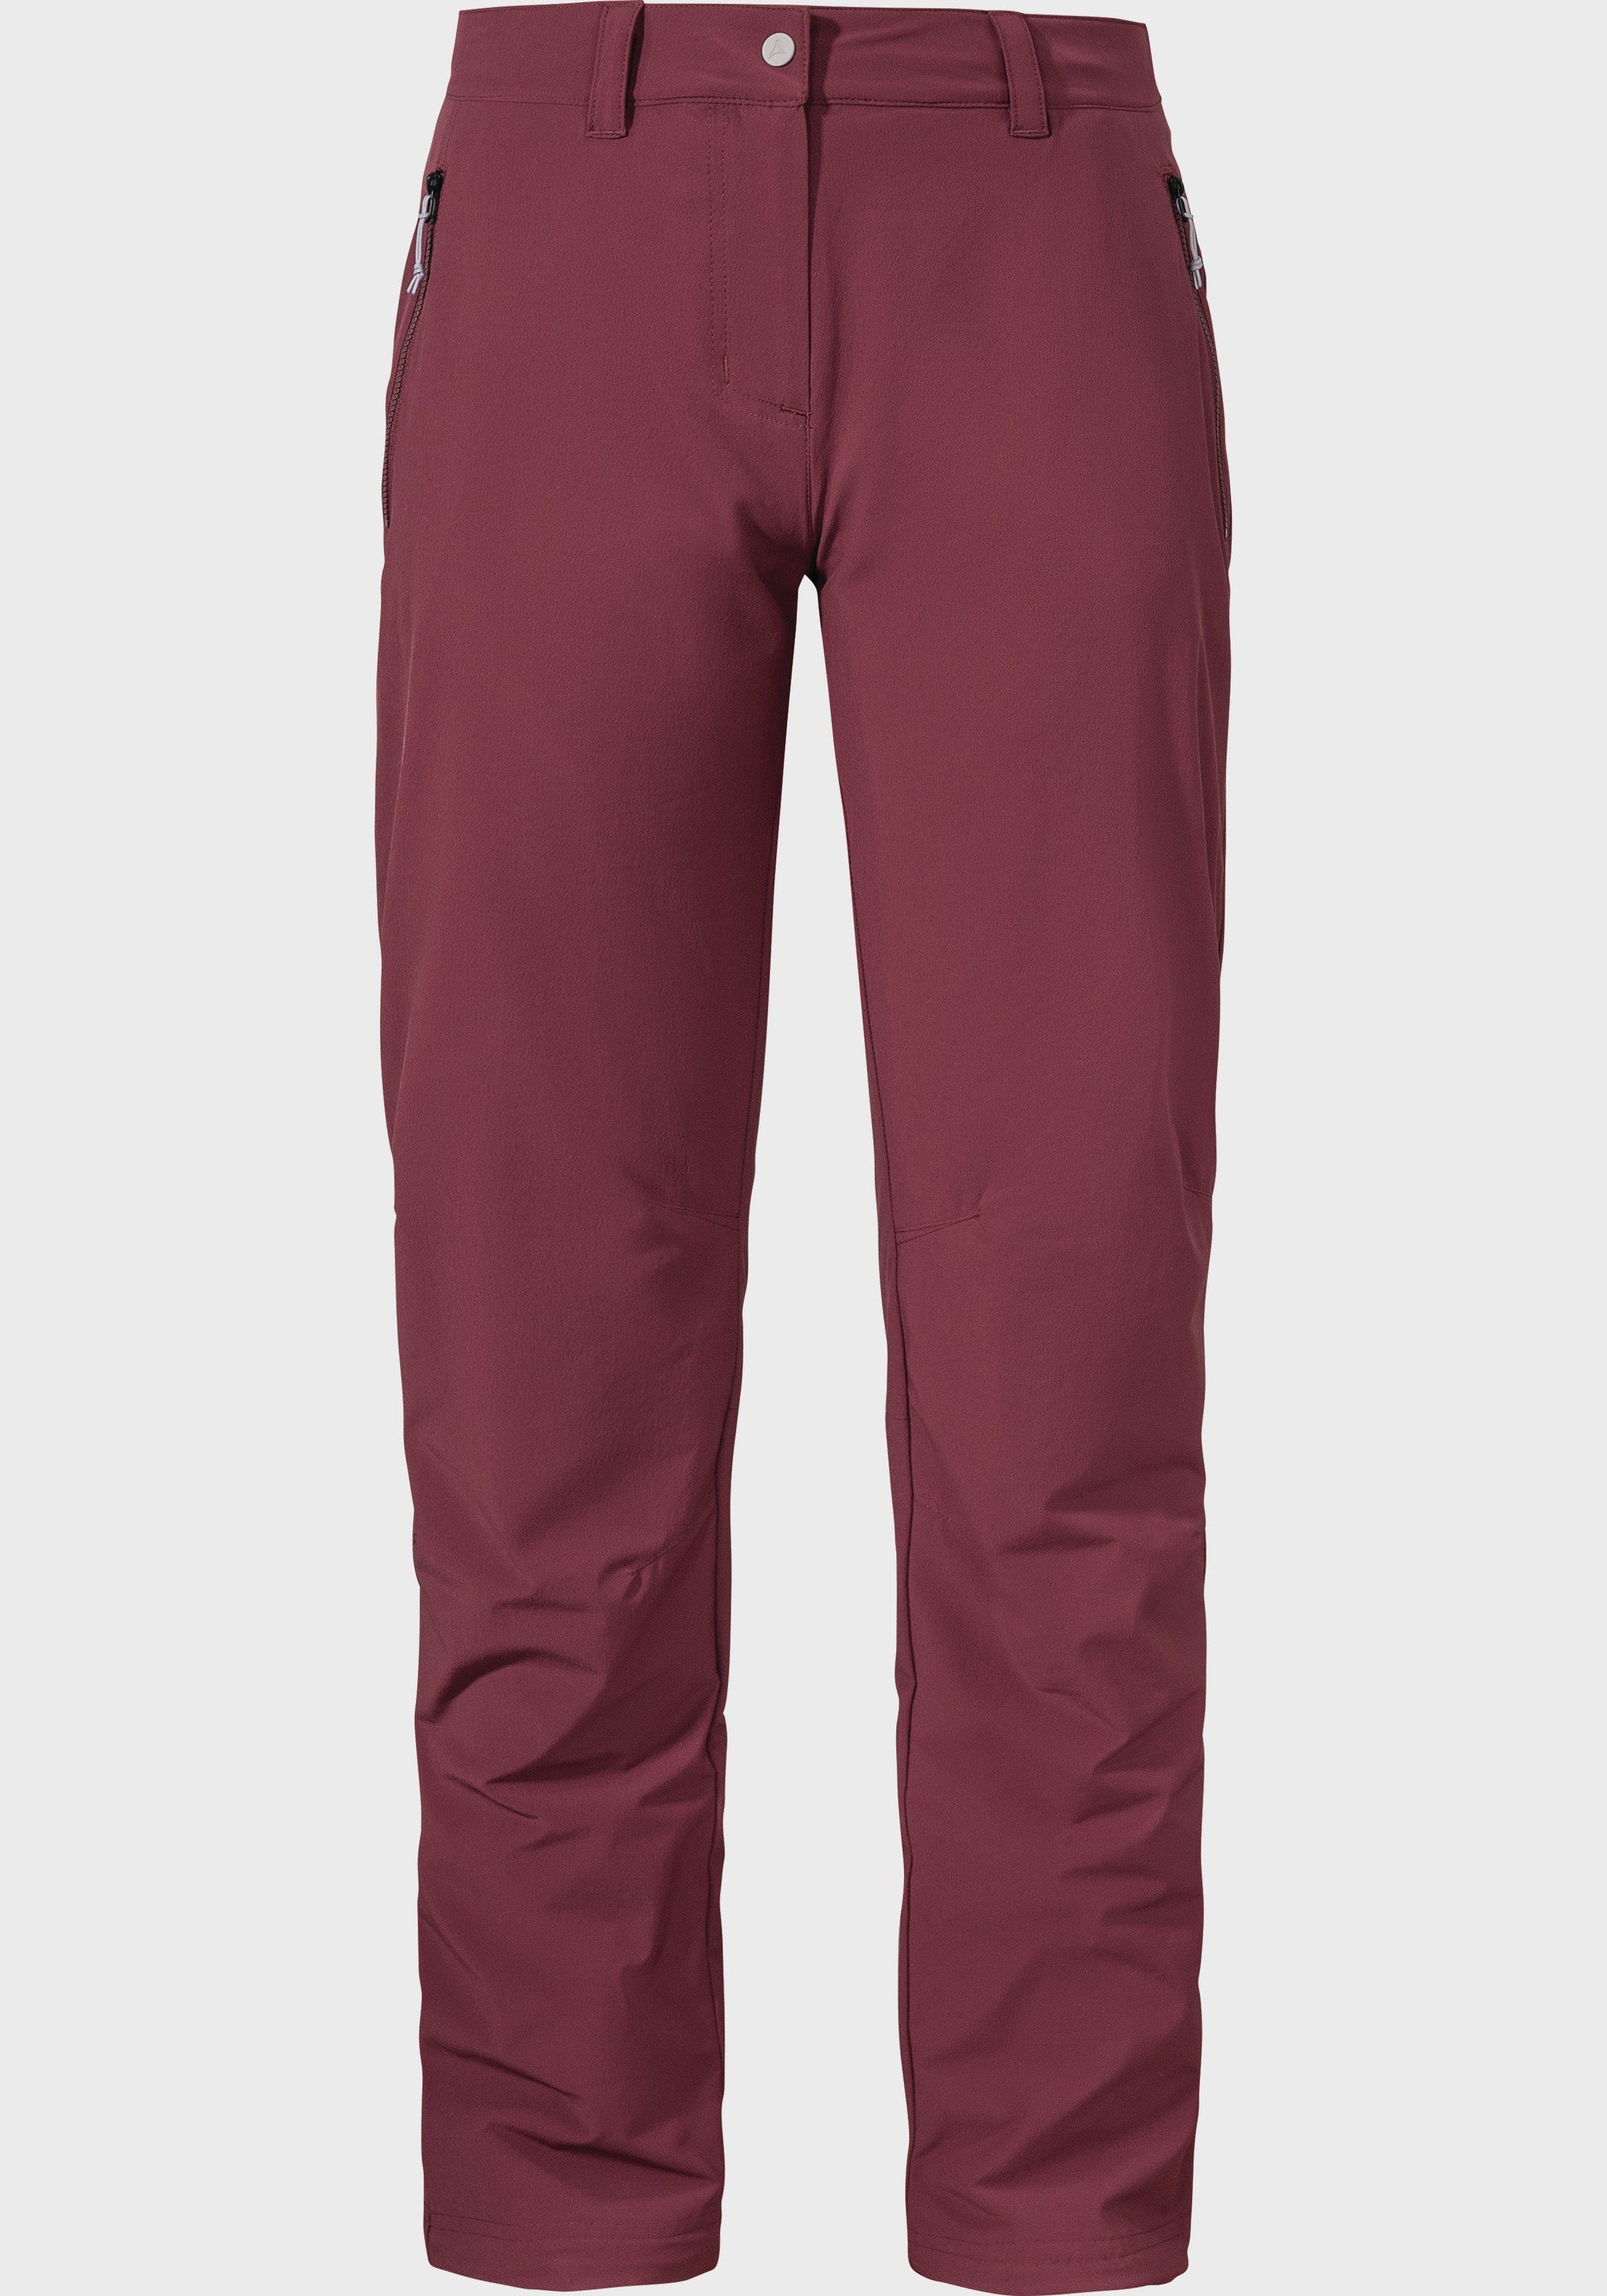 Schöffel Outdoorhose Pants Engadin1 Warm L rot | 